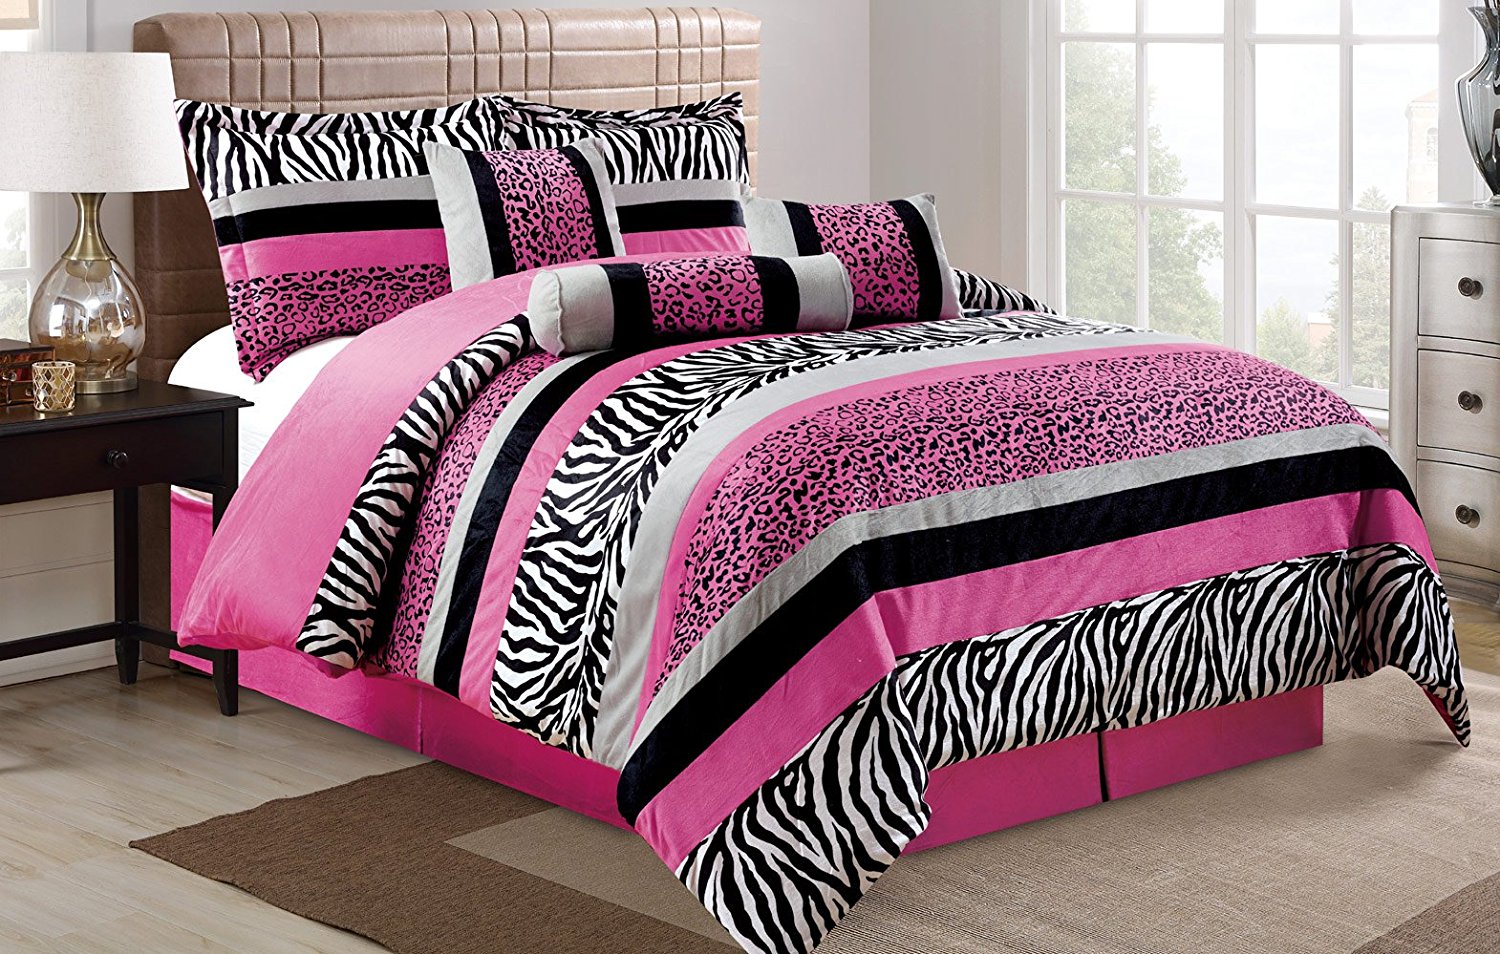 7 Piece Oversize HOT PINK Black White Zebra Leopard Micro Fur Comforter Set Queen Size Bedding 94"X92"